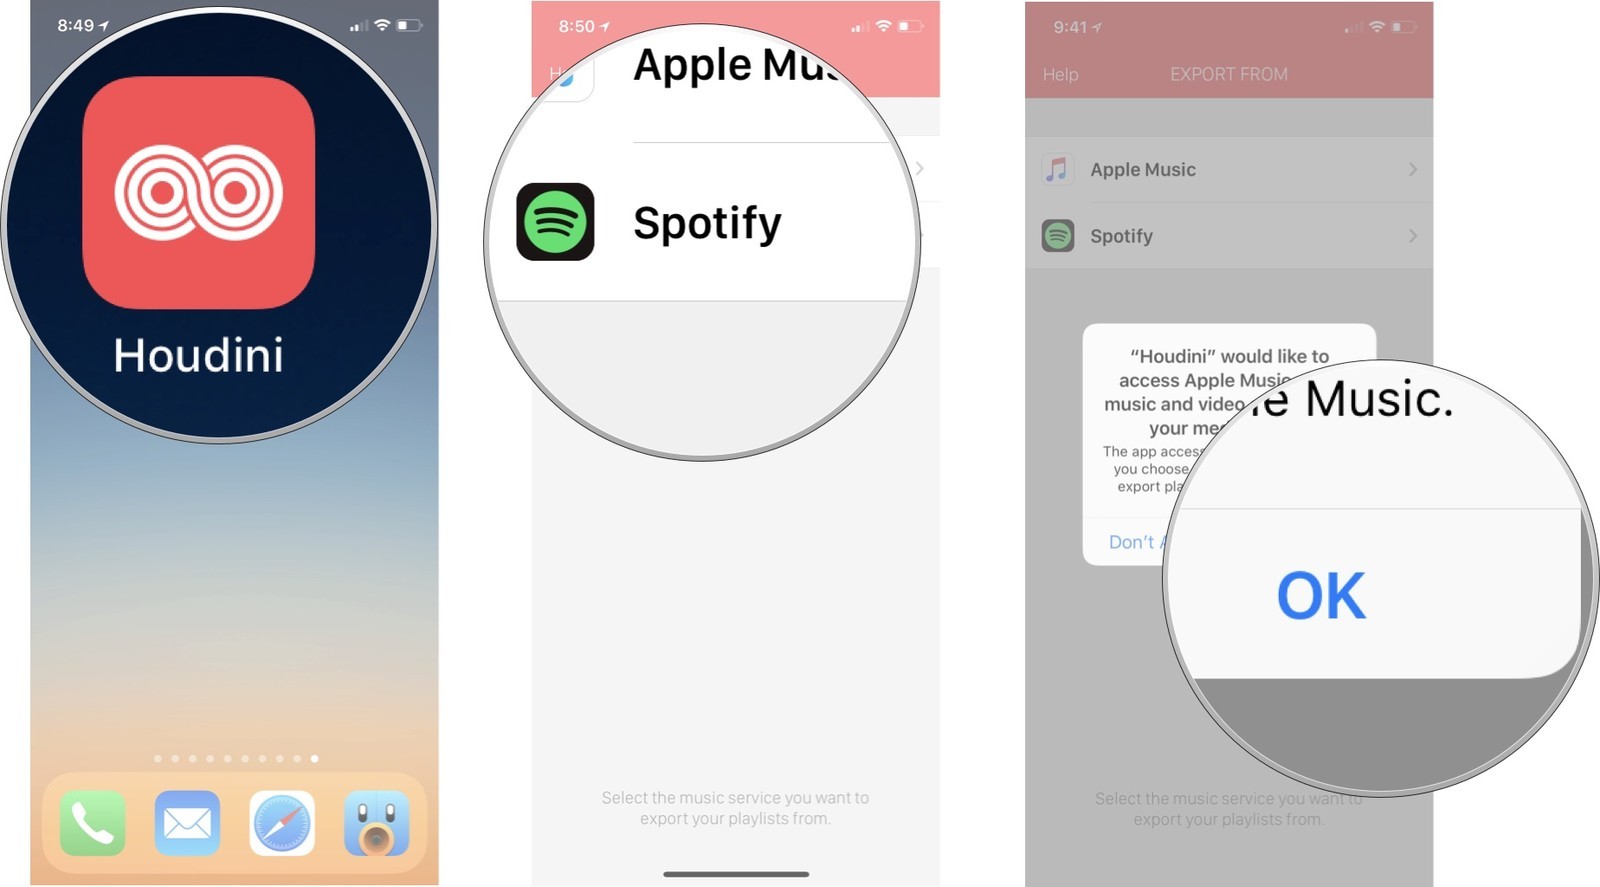 Transfira playlists da Apple Music para Spotify com Houdini